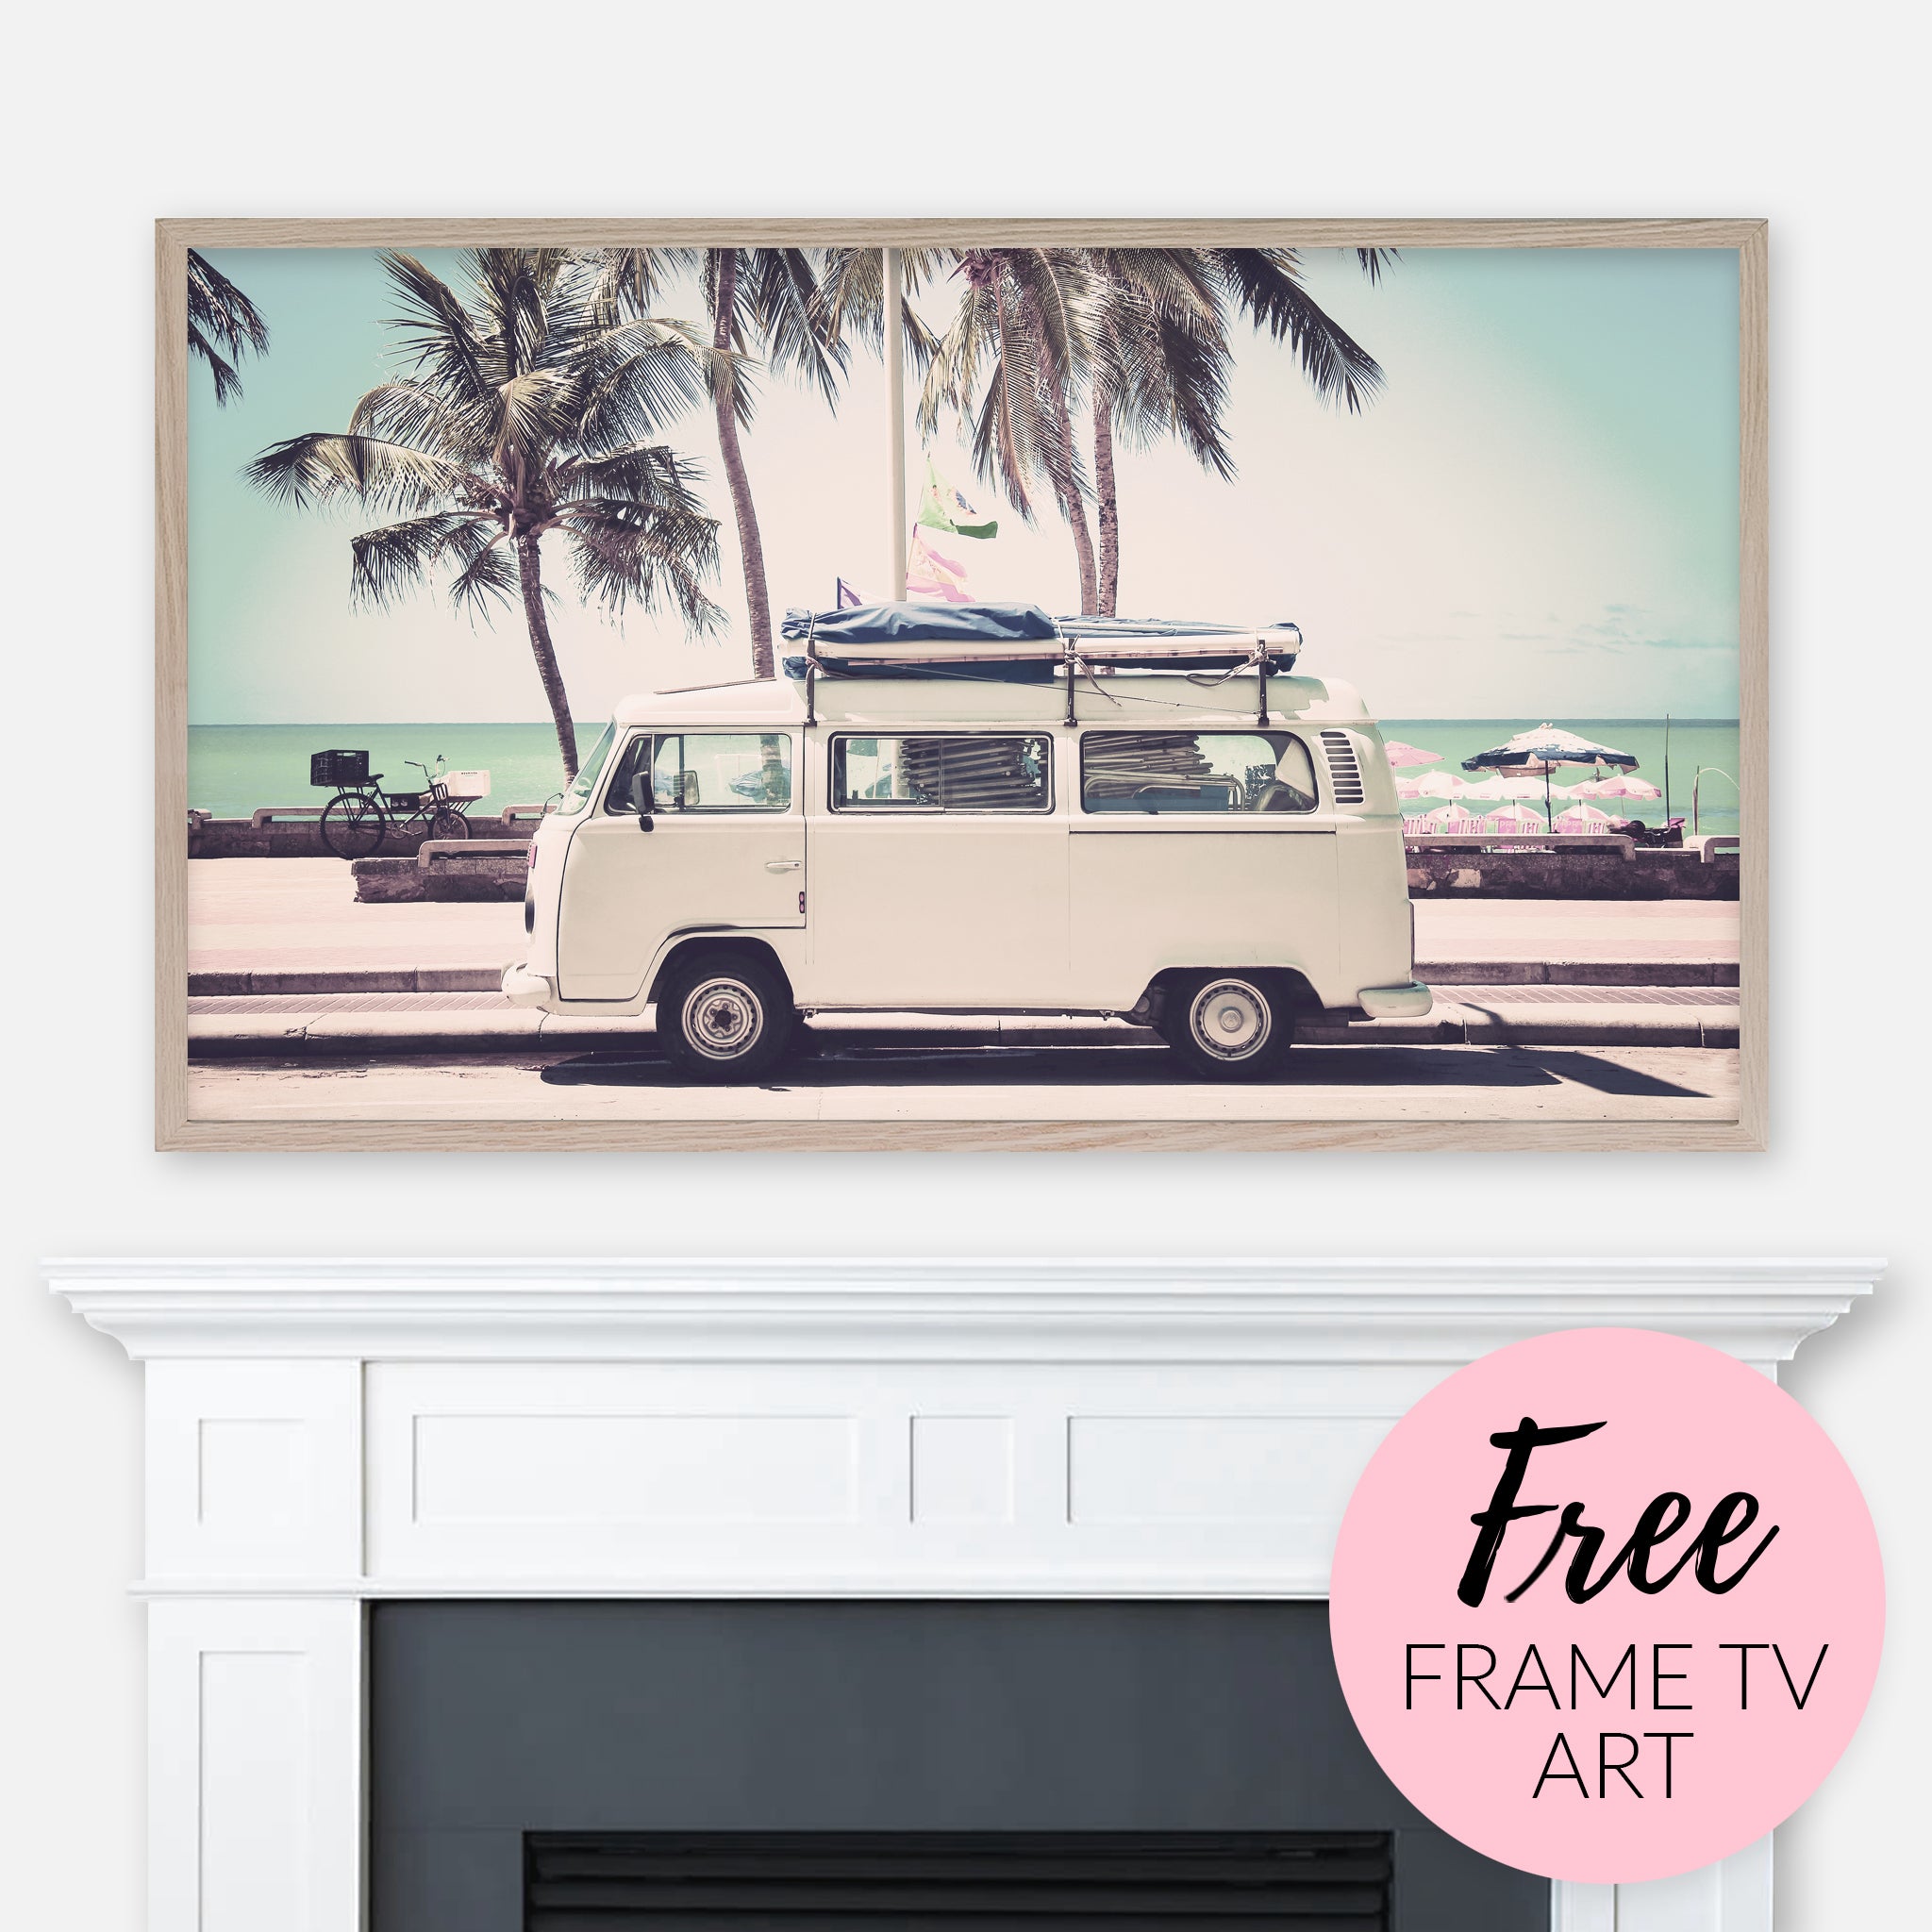 Free Summer Samsung Frame TV Art Digital Download 4K - Camper Van on Beach with Palm Trees Photography